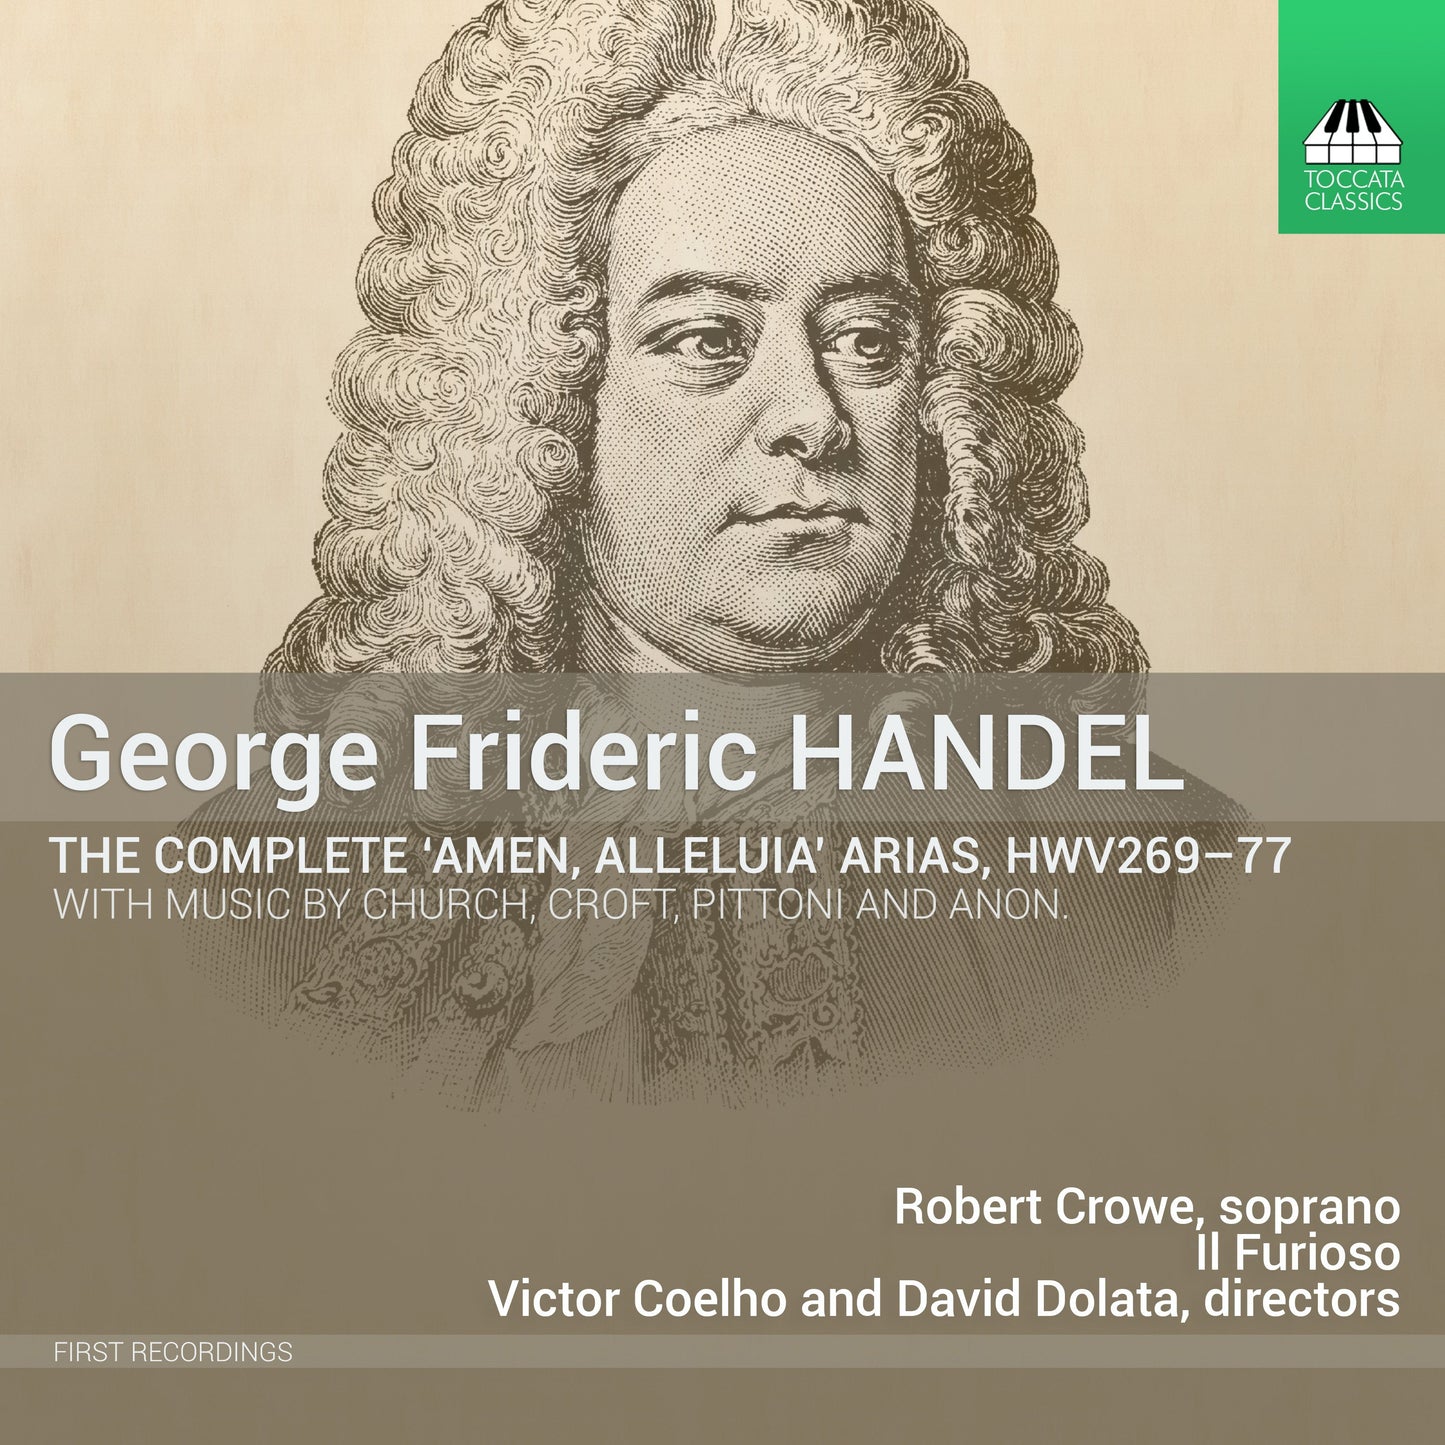 Handel: The Complete "Amen, Alleluia" Arias  Crow, Il Furioso, Coelho, Dolata